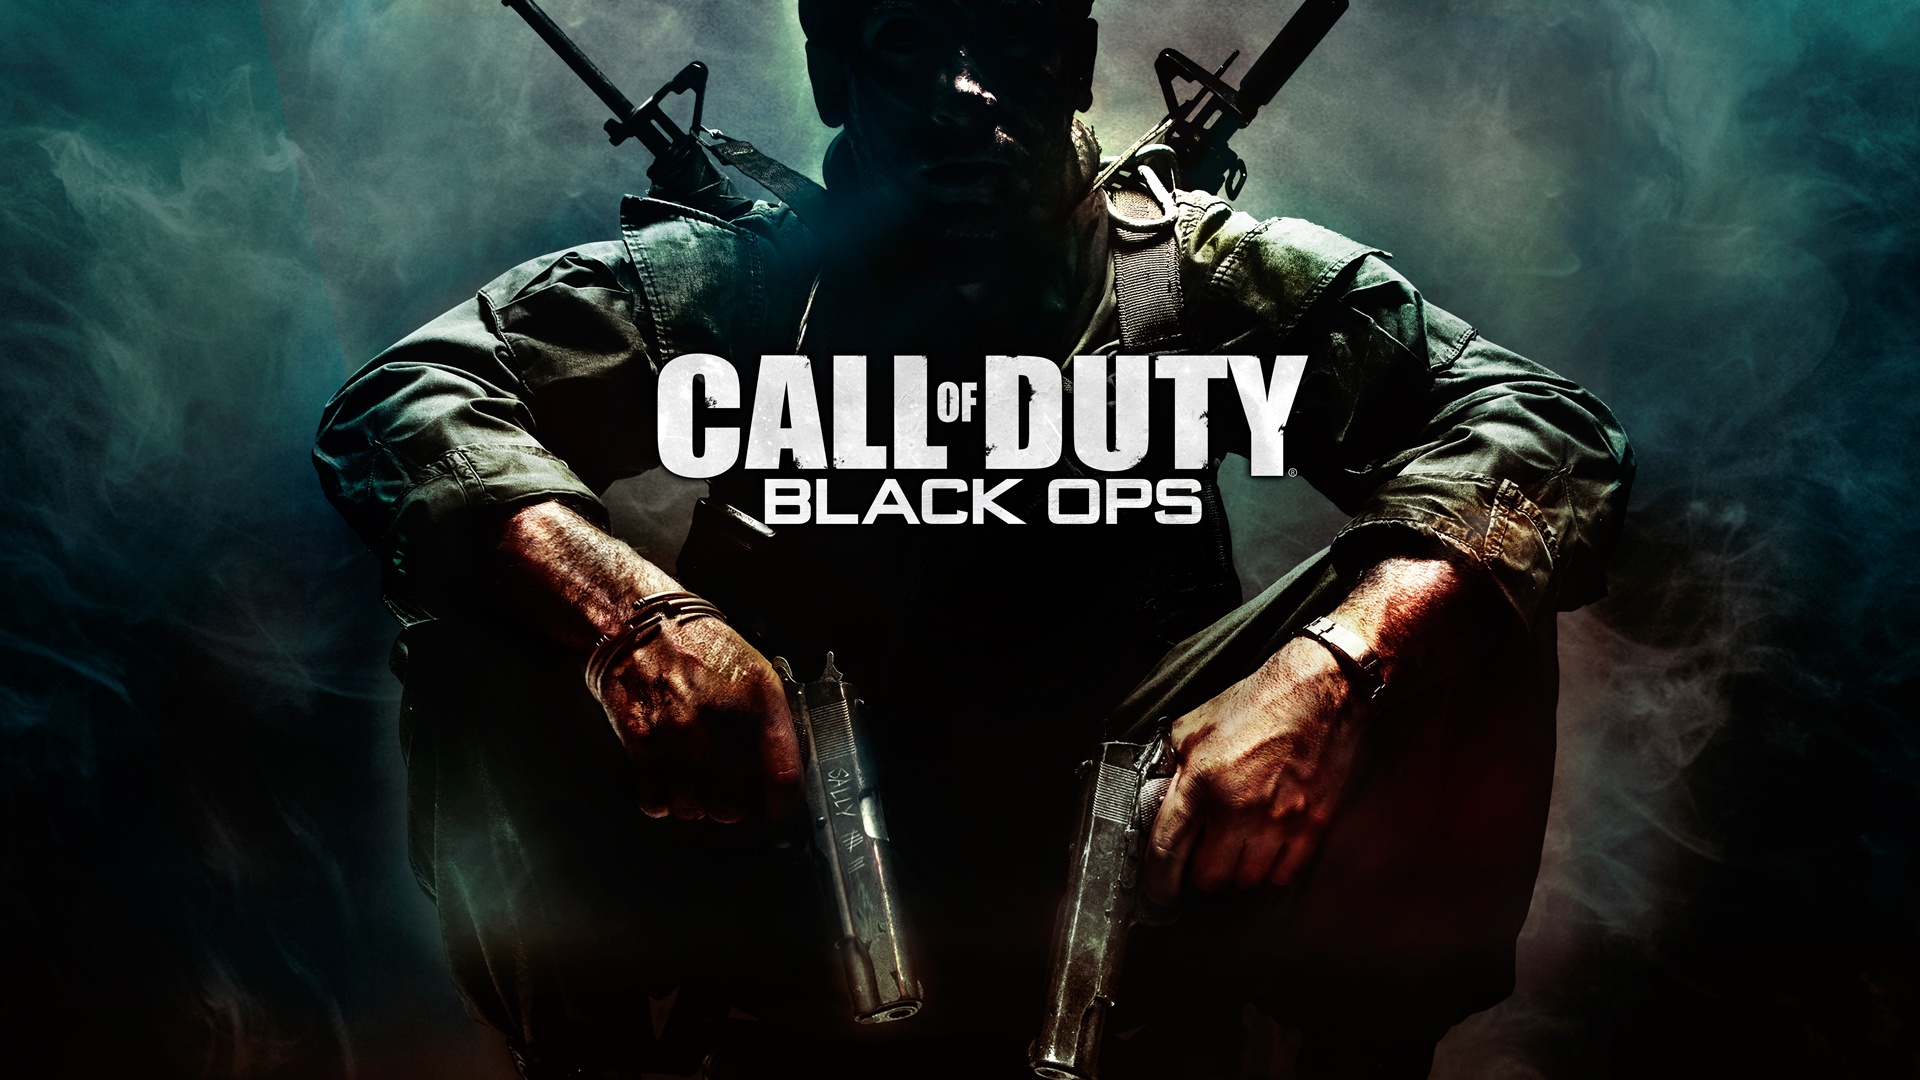 call of duty black ops logo